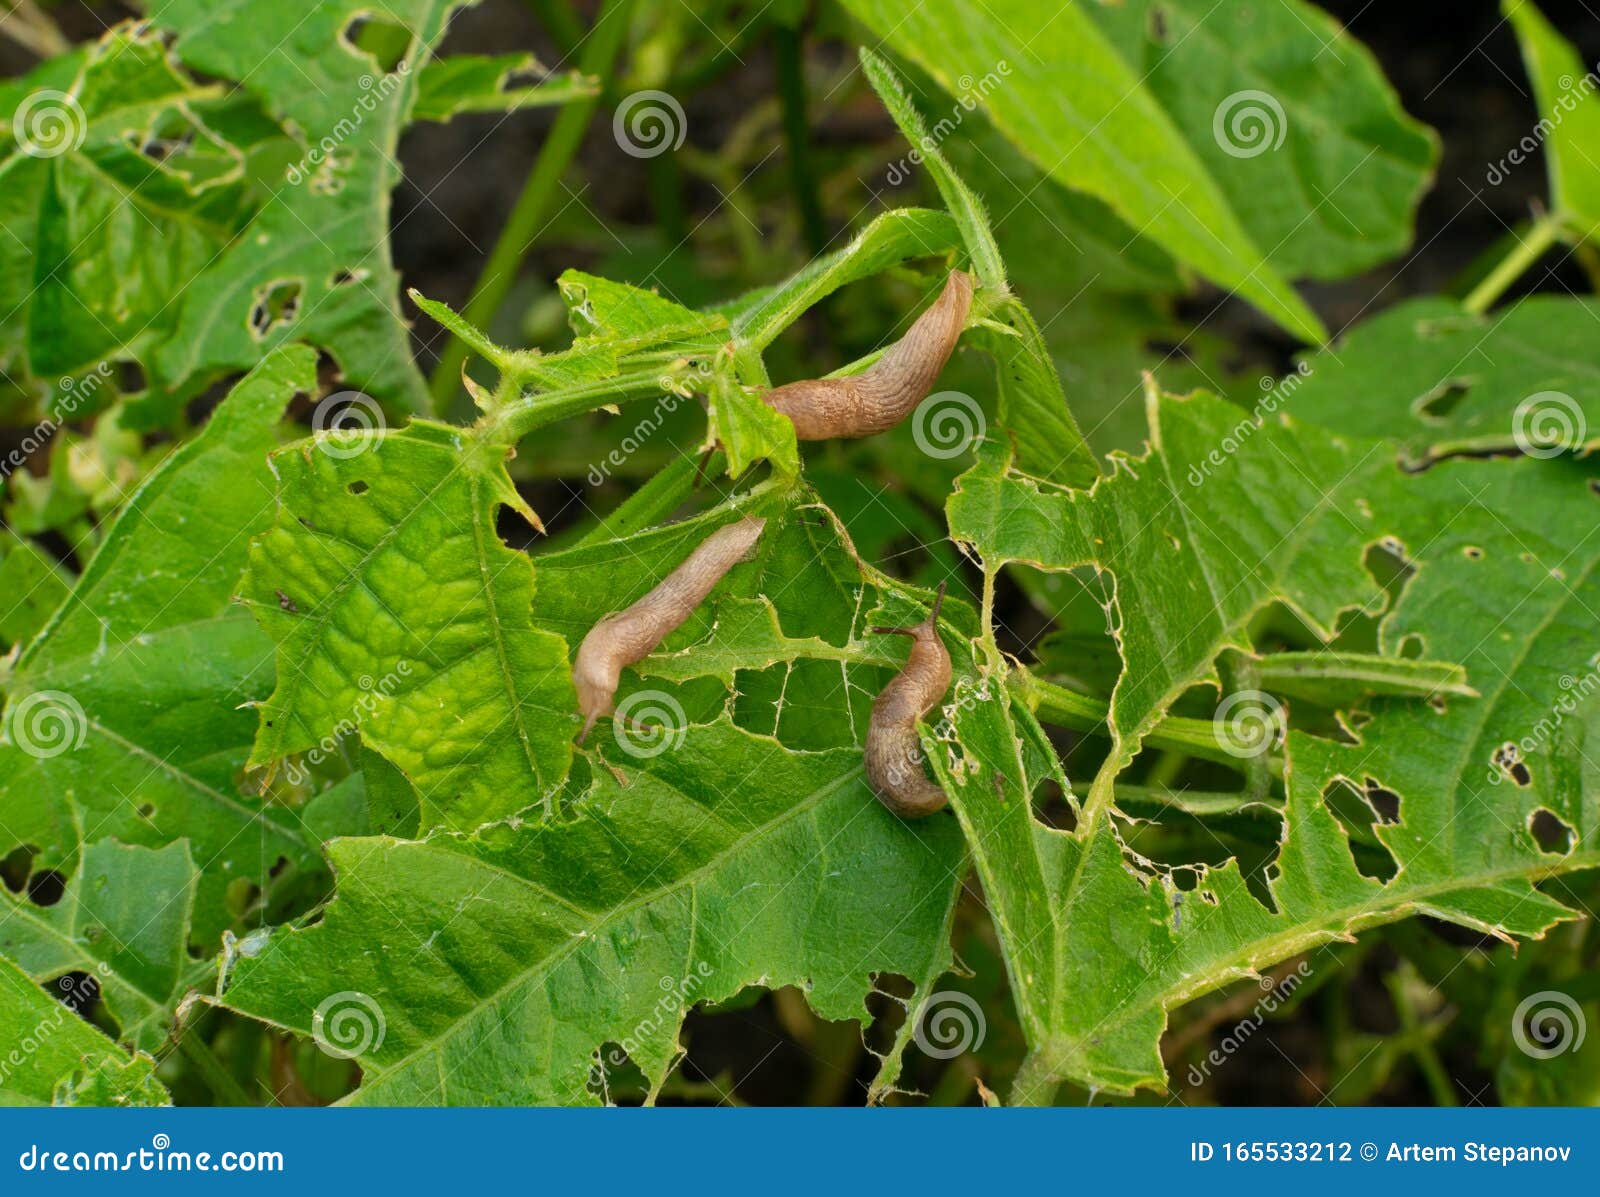 snails, slugs or brown slugs destroy plants in the garden